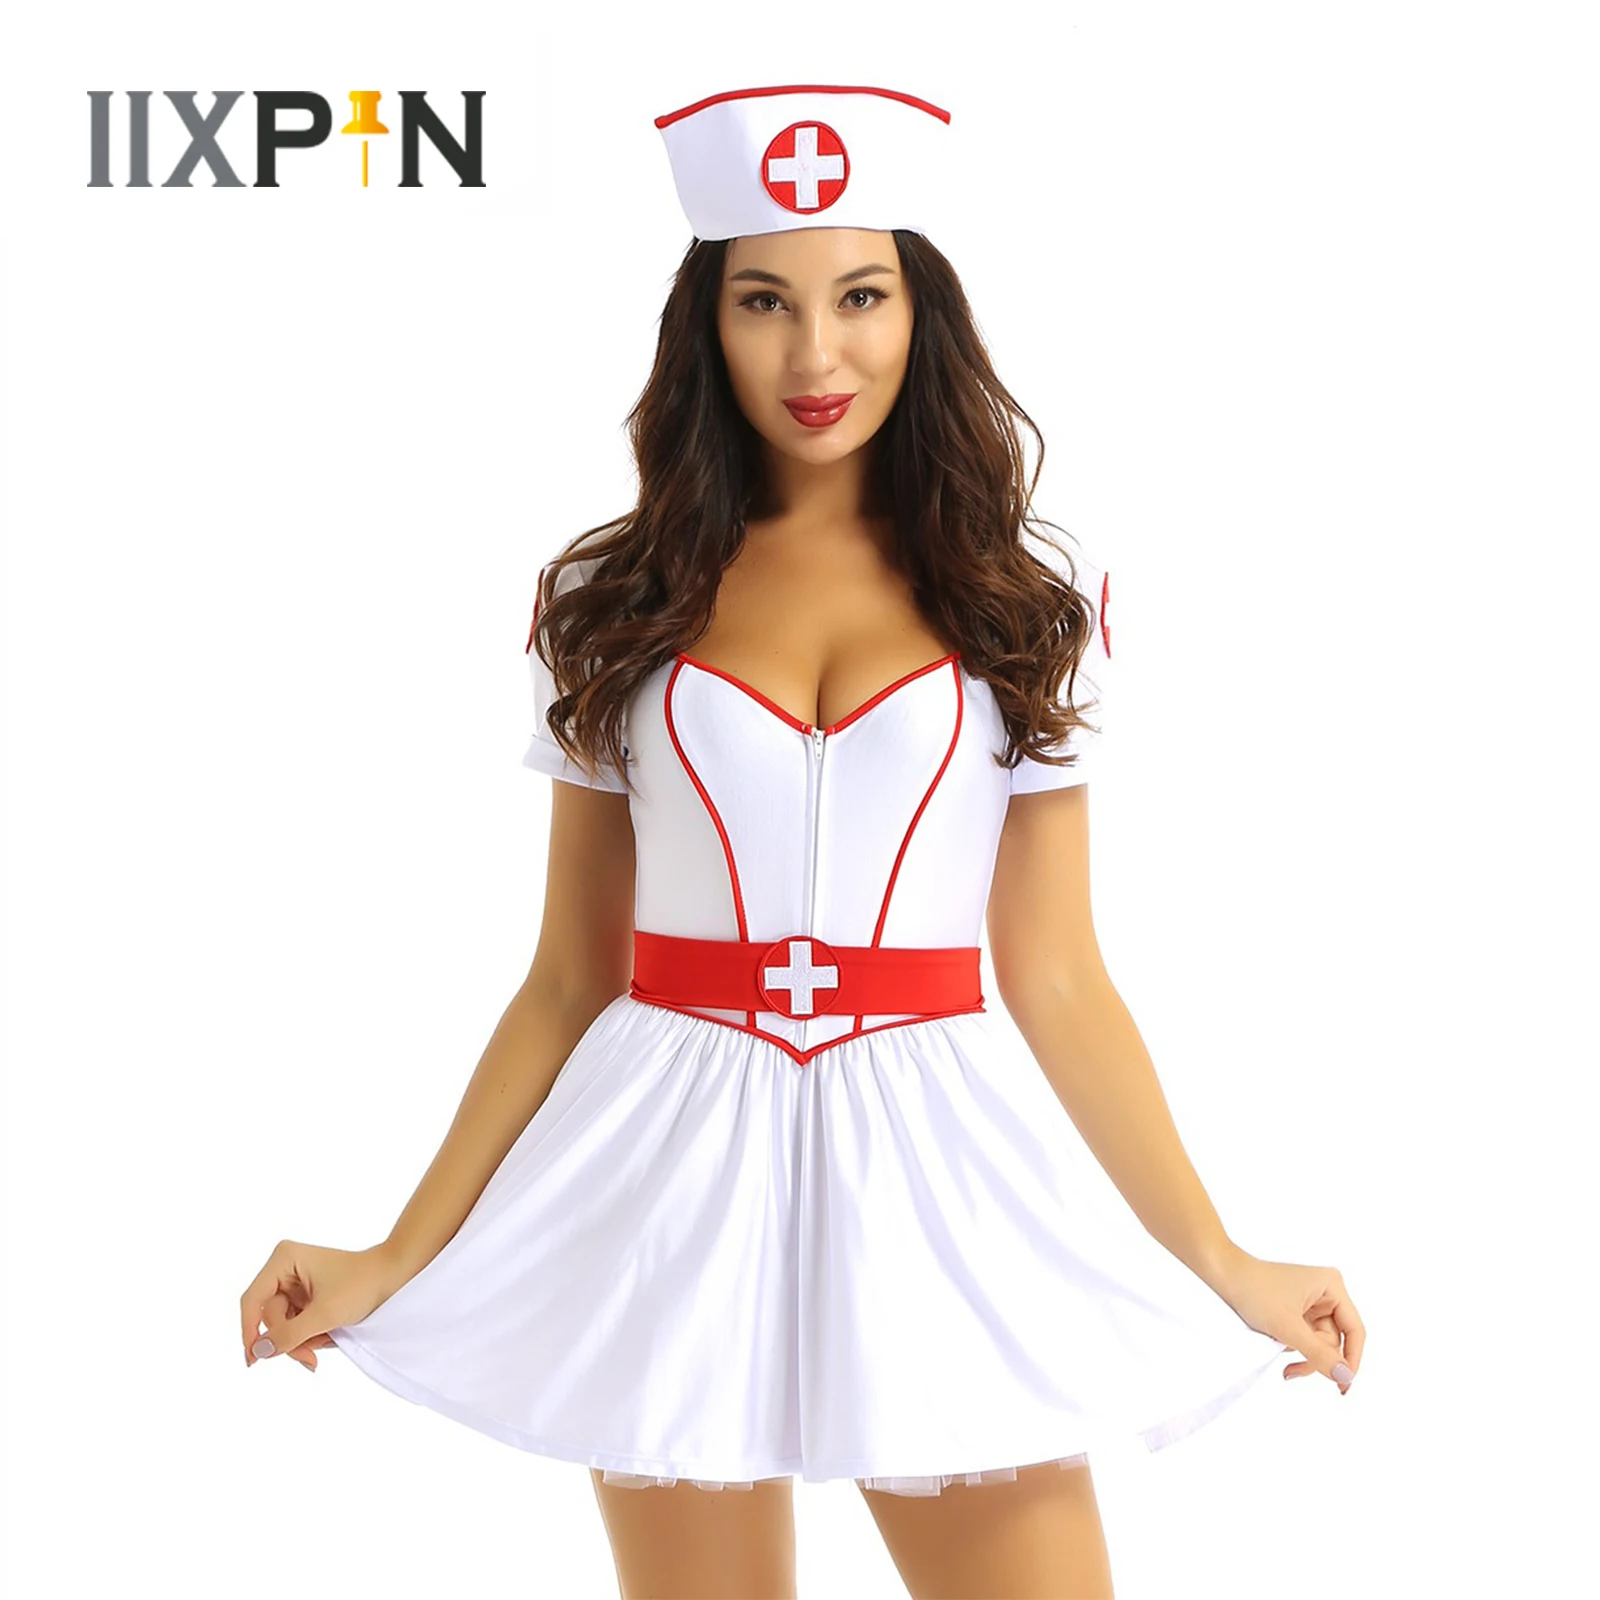 

Women Sexy Lingerie Adults Cosplay Nurse Dress Halloween Party Costume Sweetheart Short Sleeves Tutu Dress+Headband+Belt Outfit